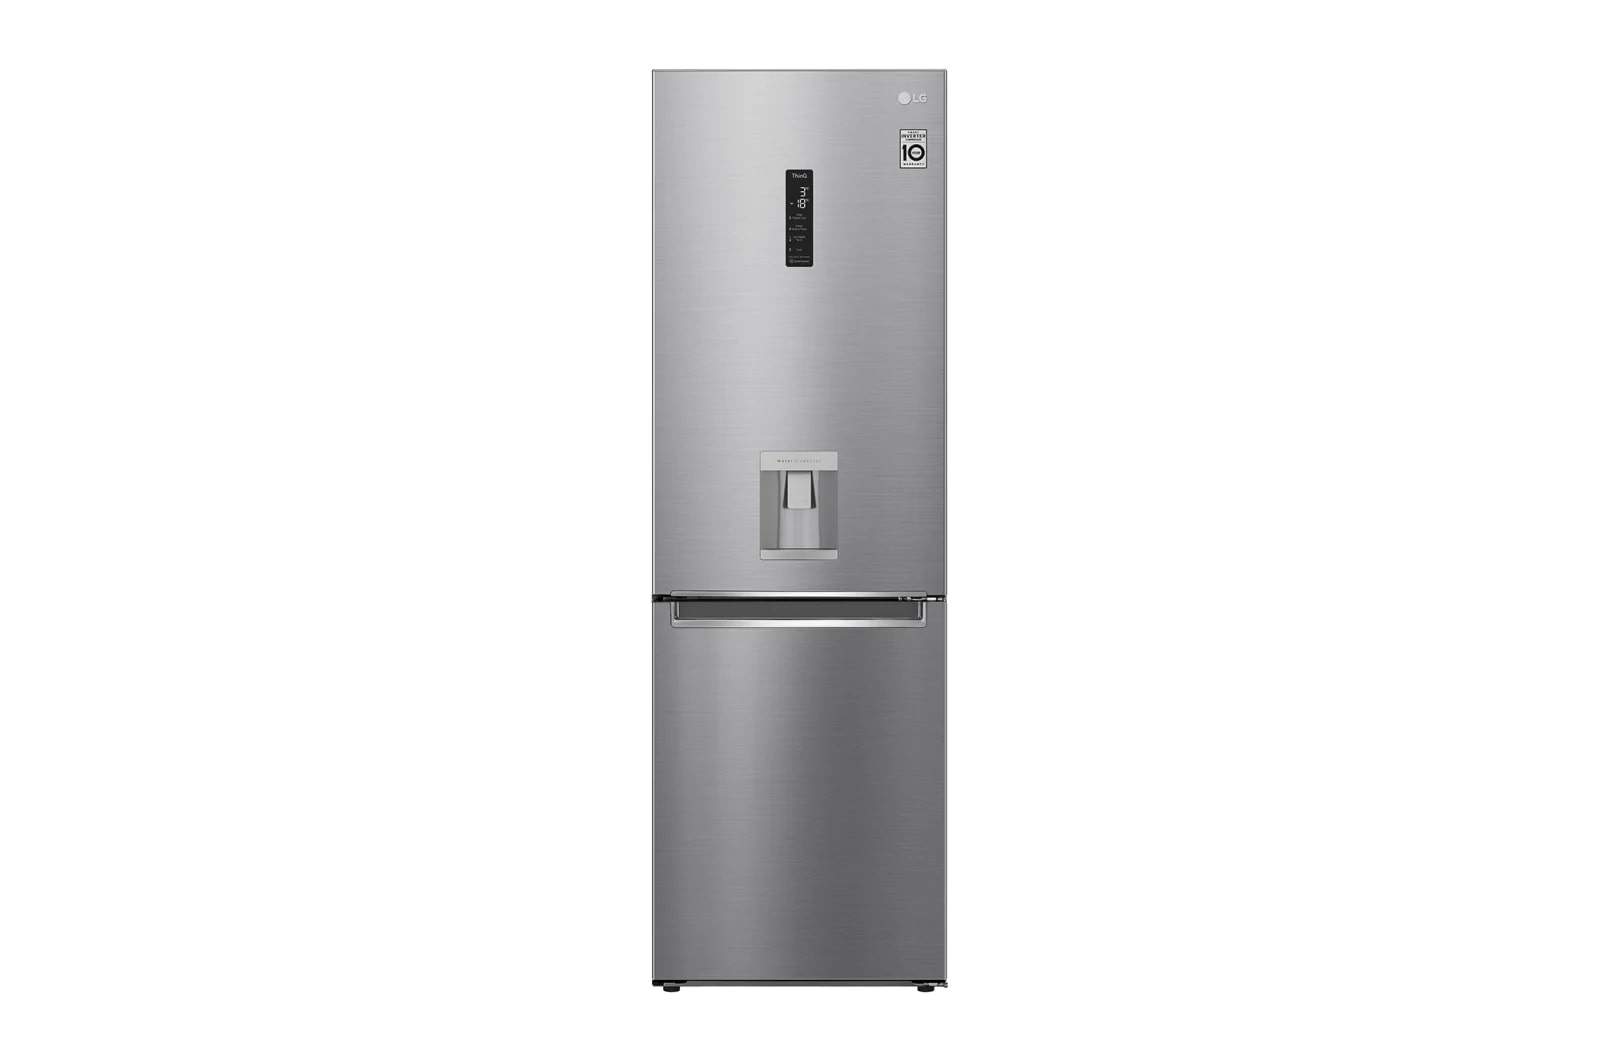 LG Refrigerador Bottom Freezer con motor Smart Inverter Compressor y capacidad total de 336 Litros- ThinQ AI, GB37SPP